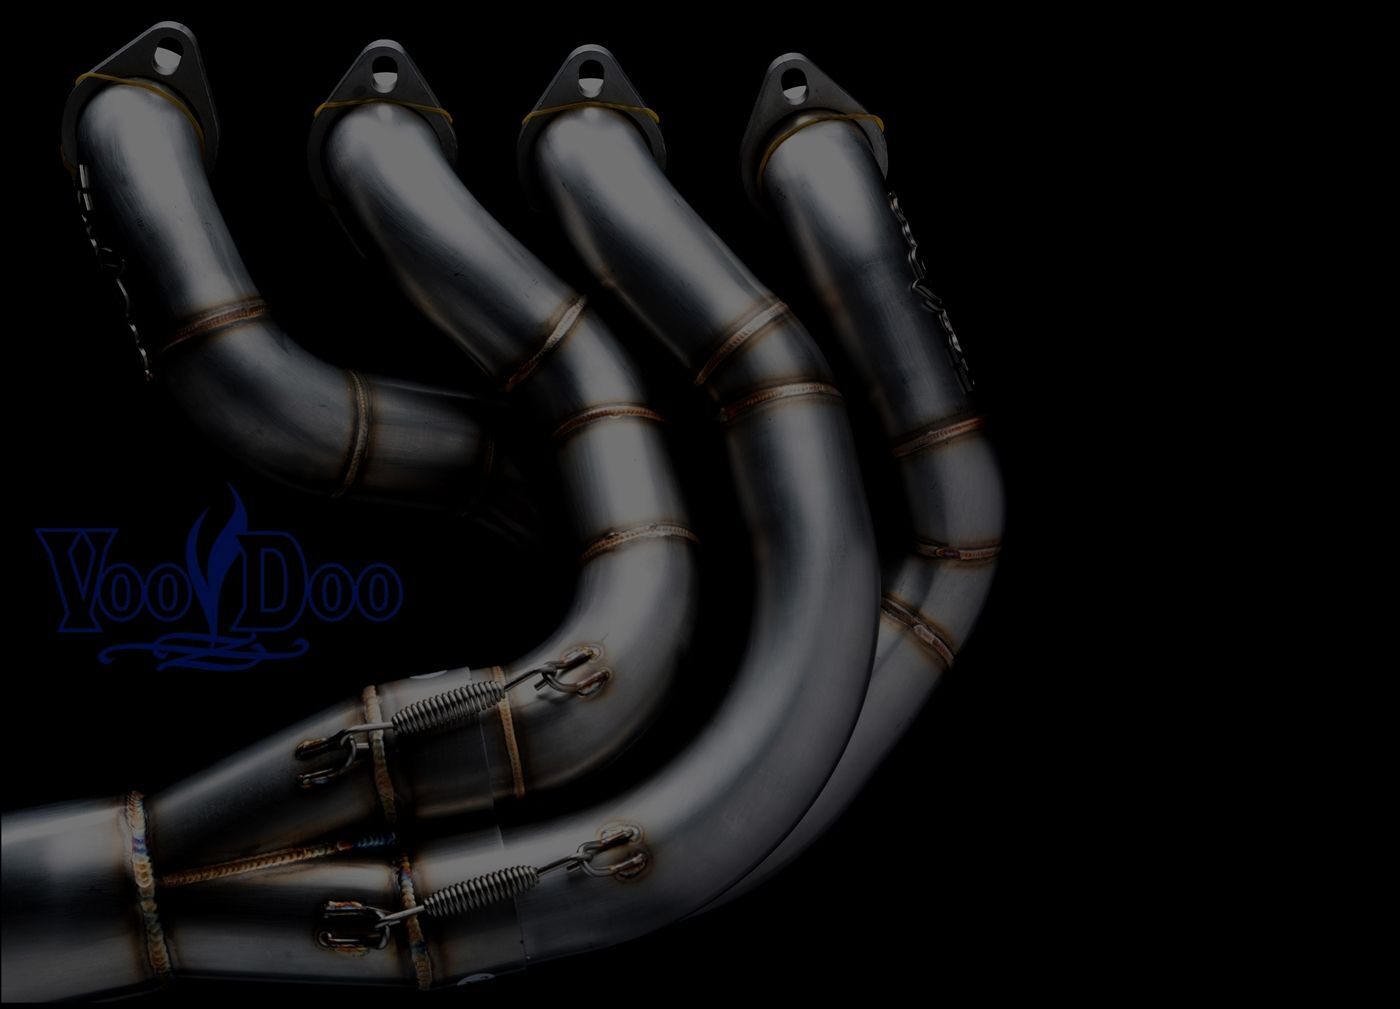 Exhaust Pipes # VSEBTSSBUSAJ9B PRODUCT DETAILS Brand: VooDoo Color 